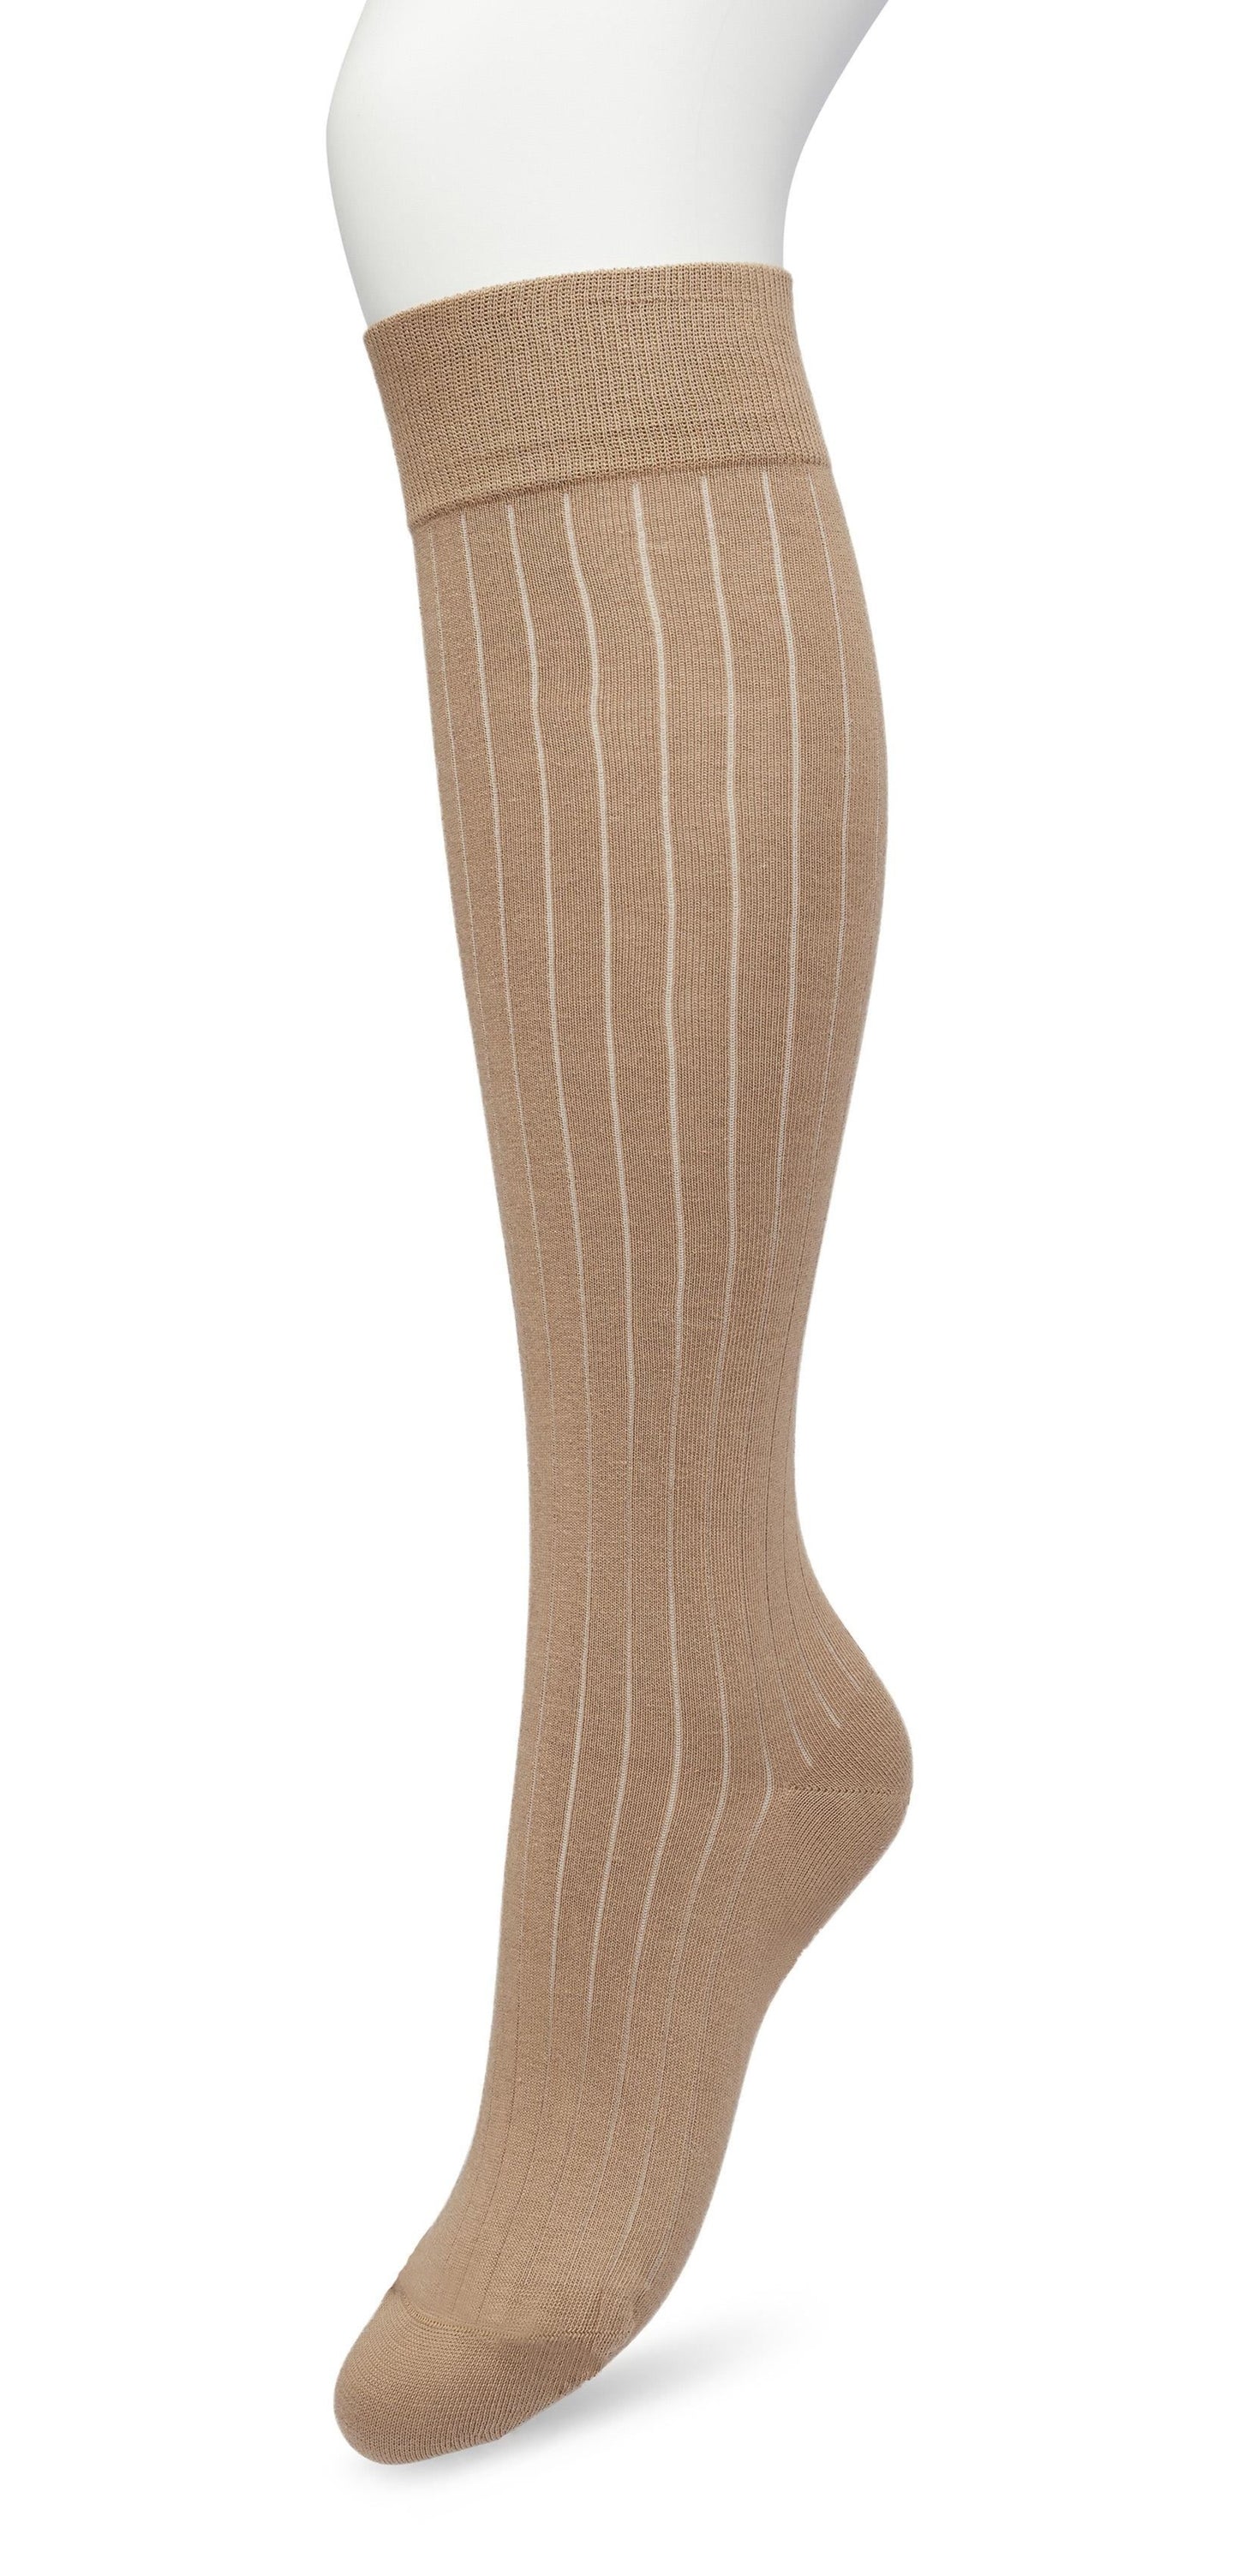 Bonnie Doon Rib Knee High Sock - Beige / camel (Sandstorm) knitted rib knee-high sock with shaped heel, flat toe seam and deep elasticated cuff.